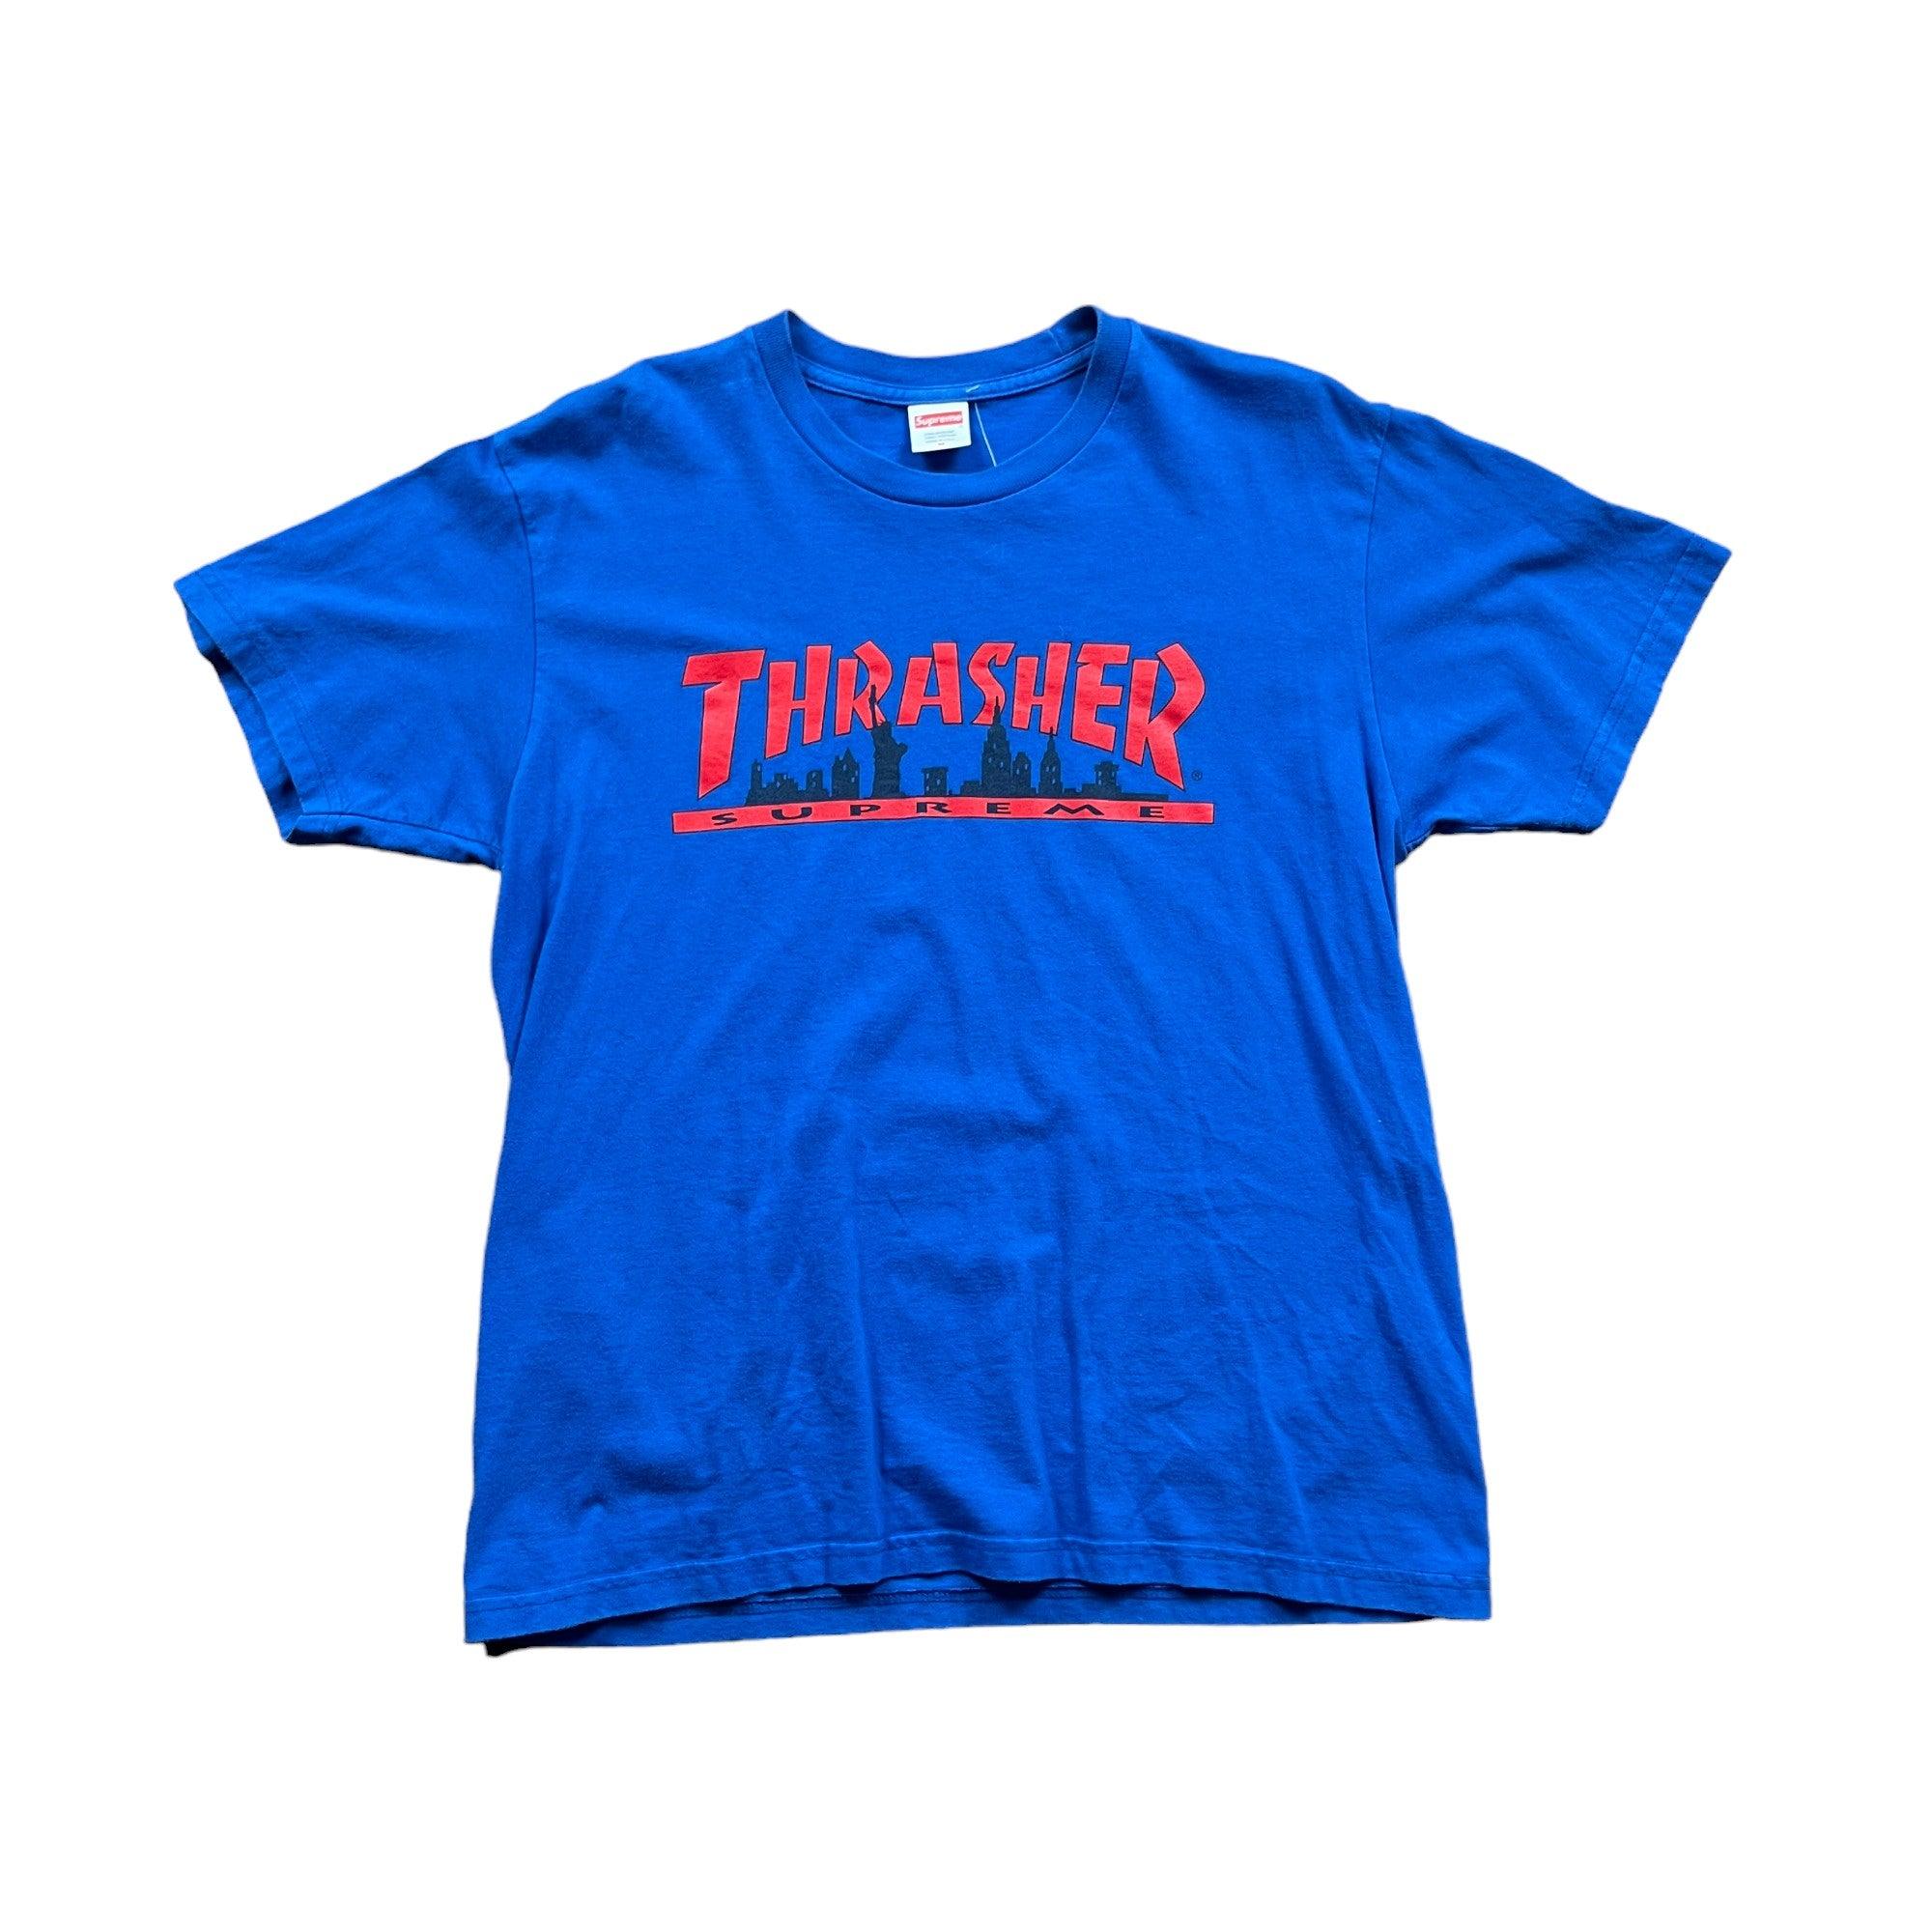 Blue Supreme x Thrasher Tee - Medium - The Streetwear Studio